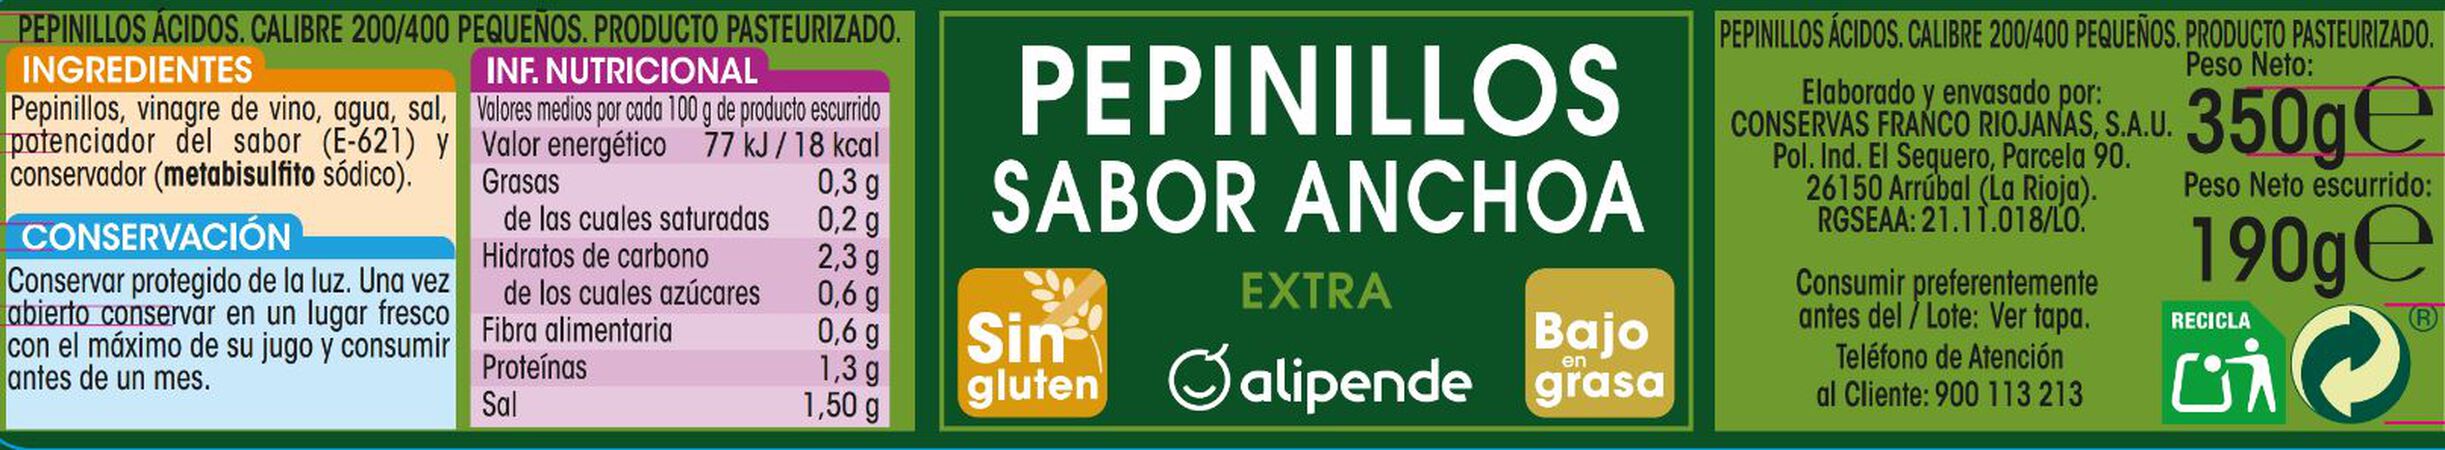 Pepinillos sabor anchoa sin gluten Alipende 190g